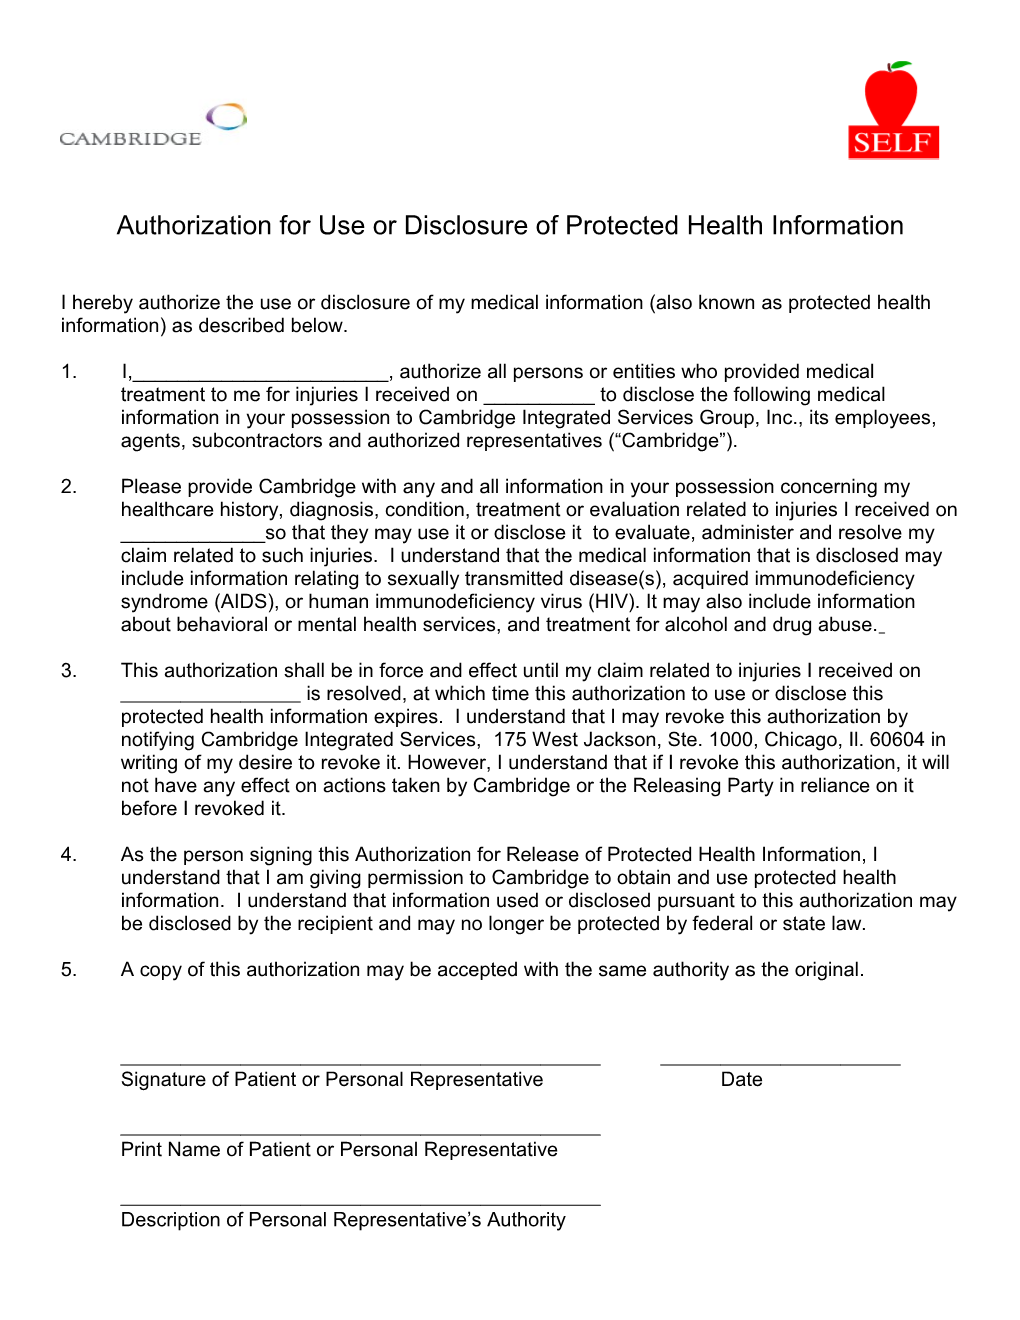 HIPAA/ASCA Privacy Authorization Form